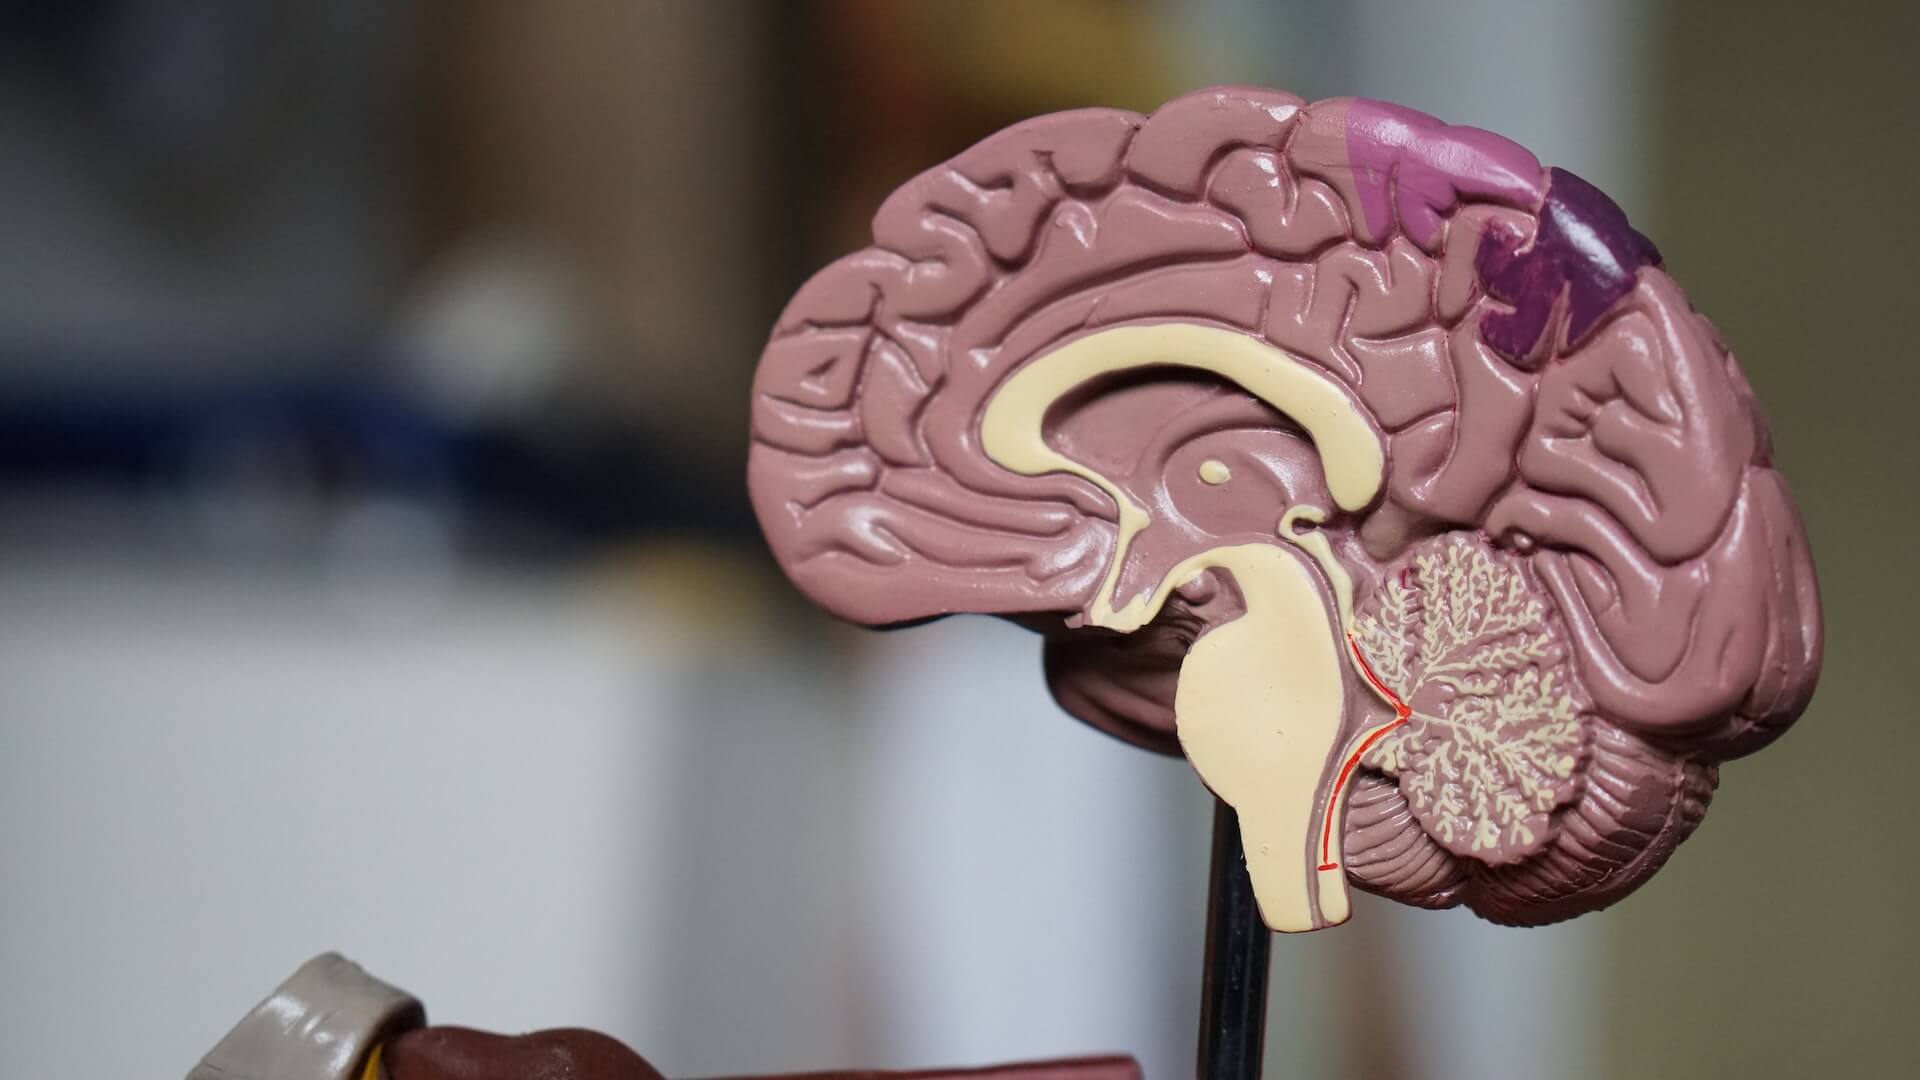 a plastic model of a brain